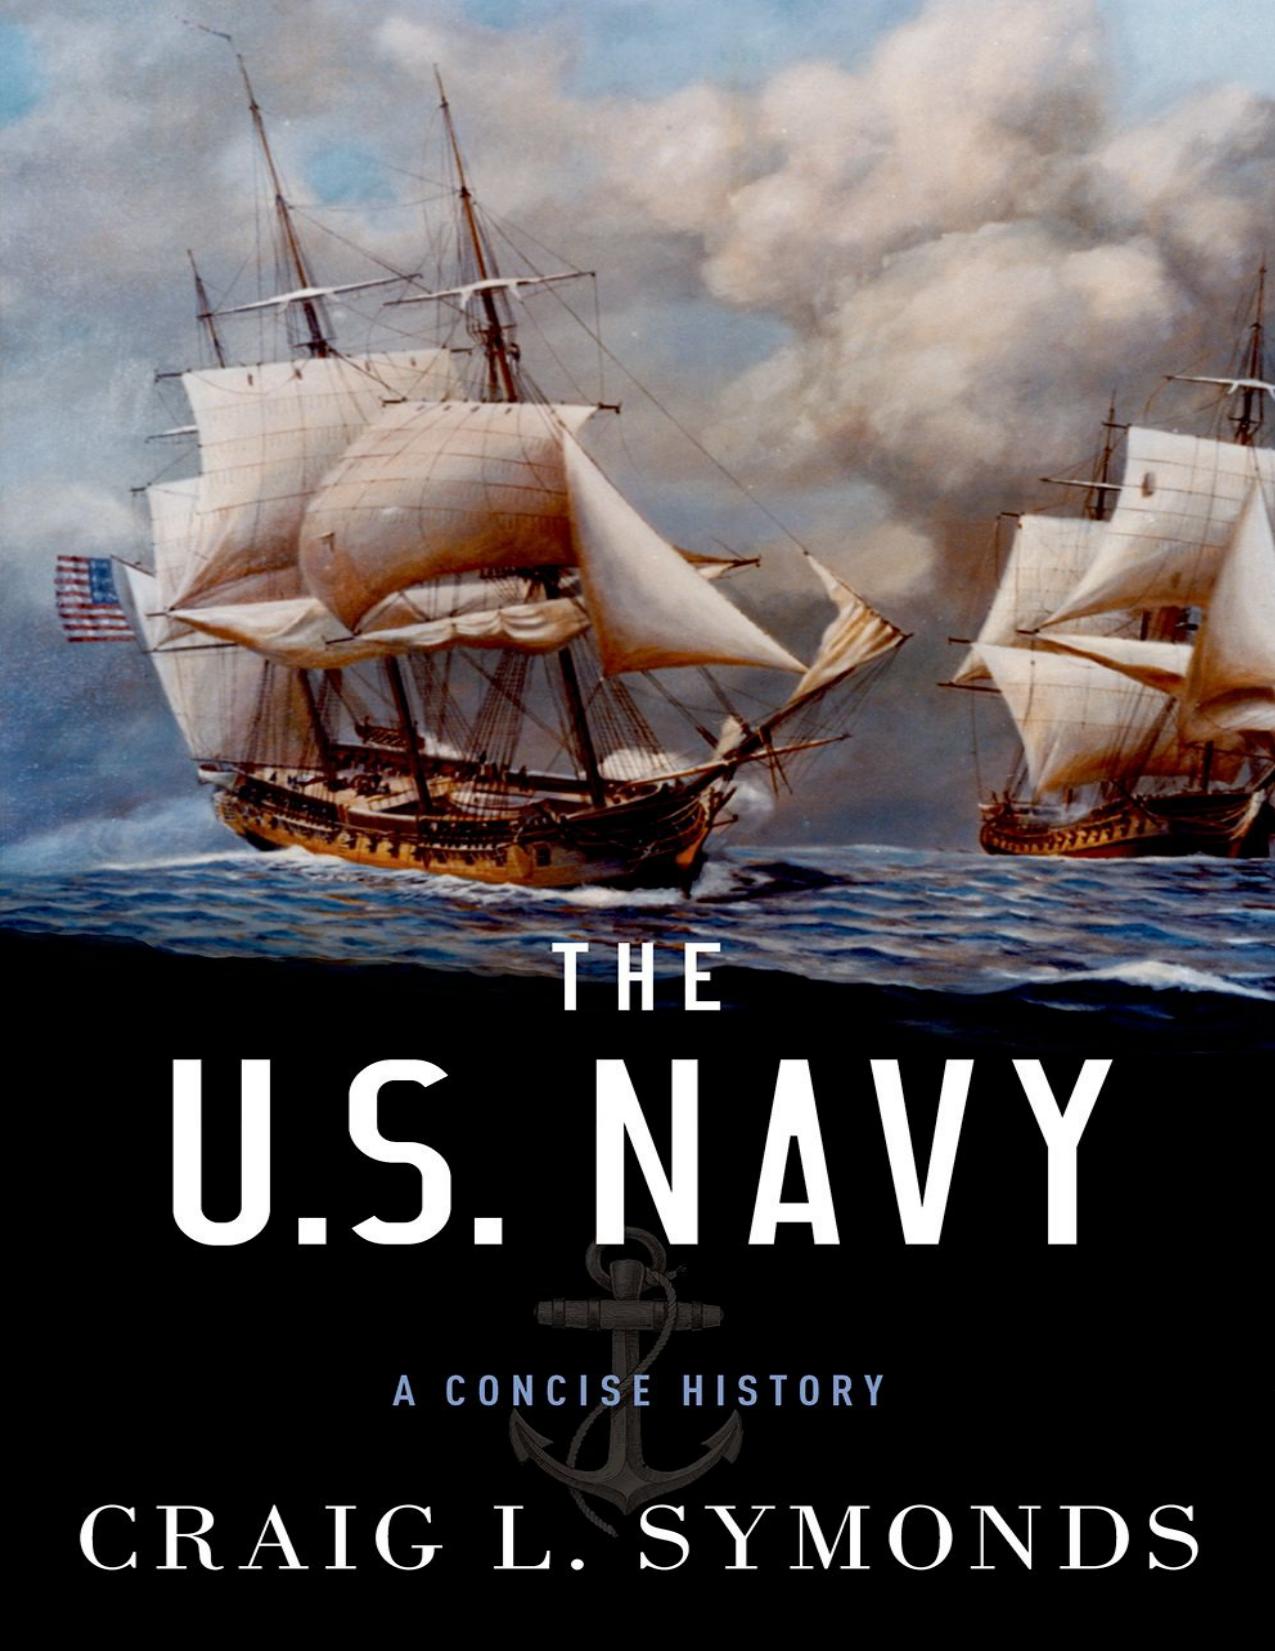 The U.S. Navy by Craig L. Symonds